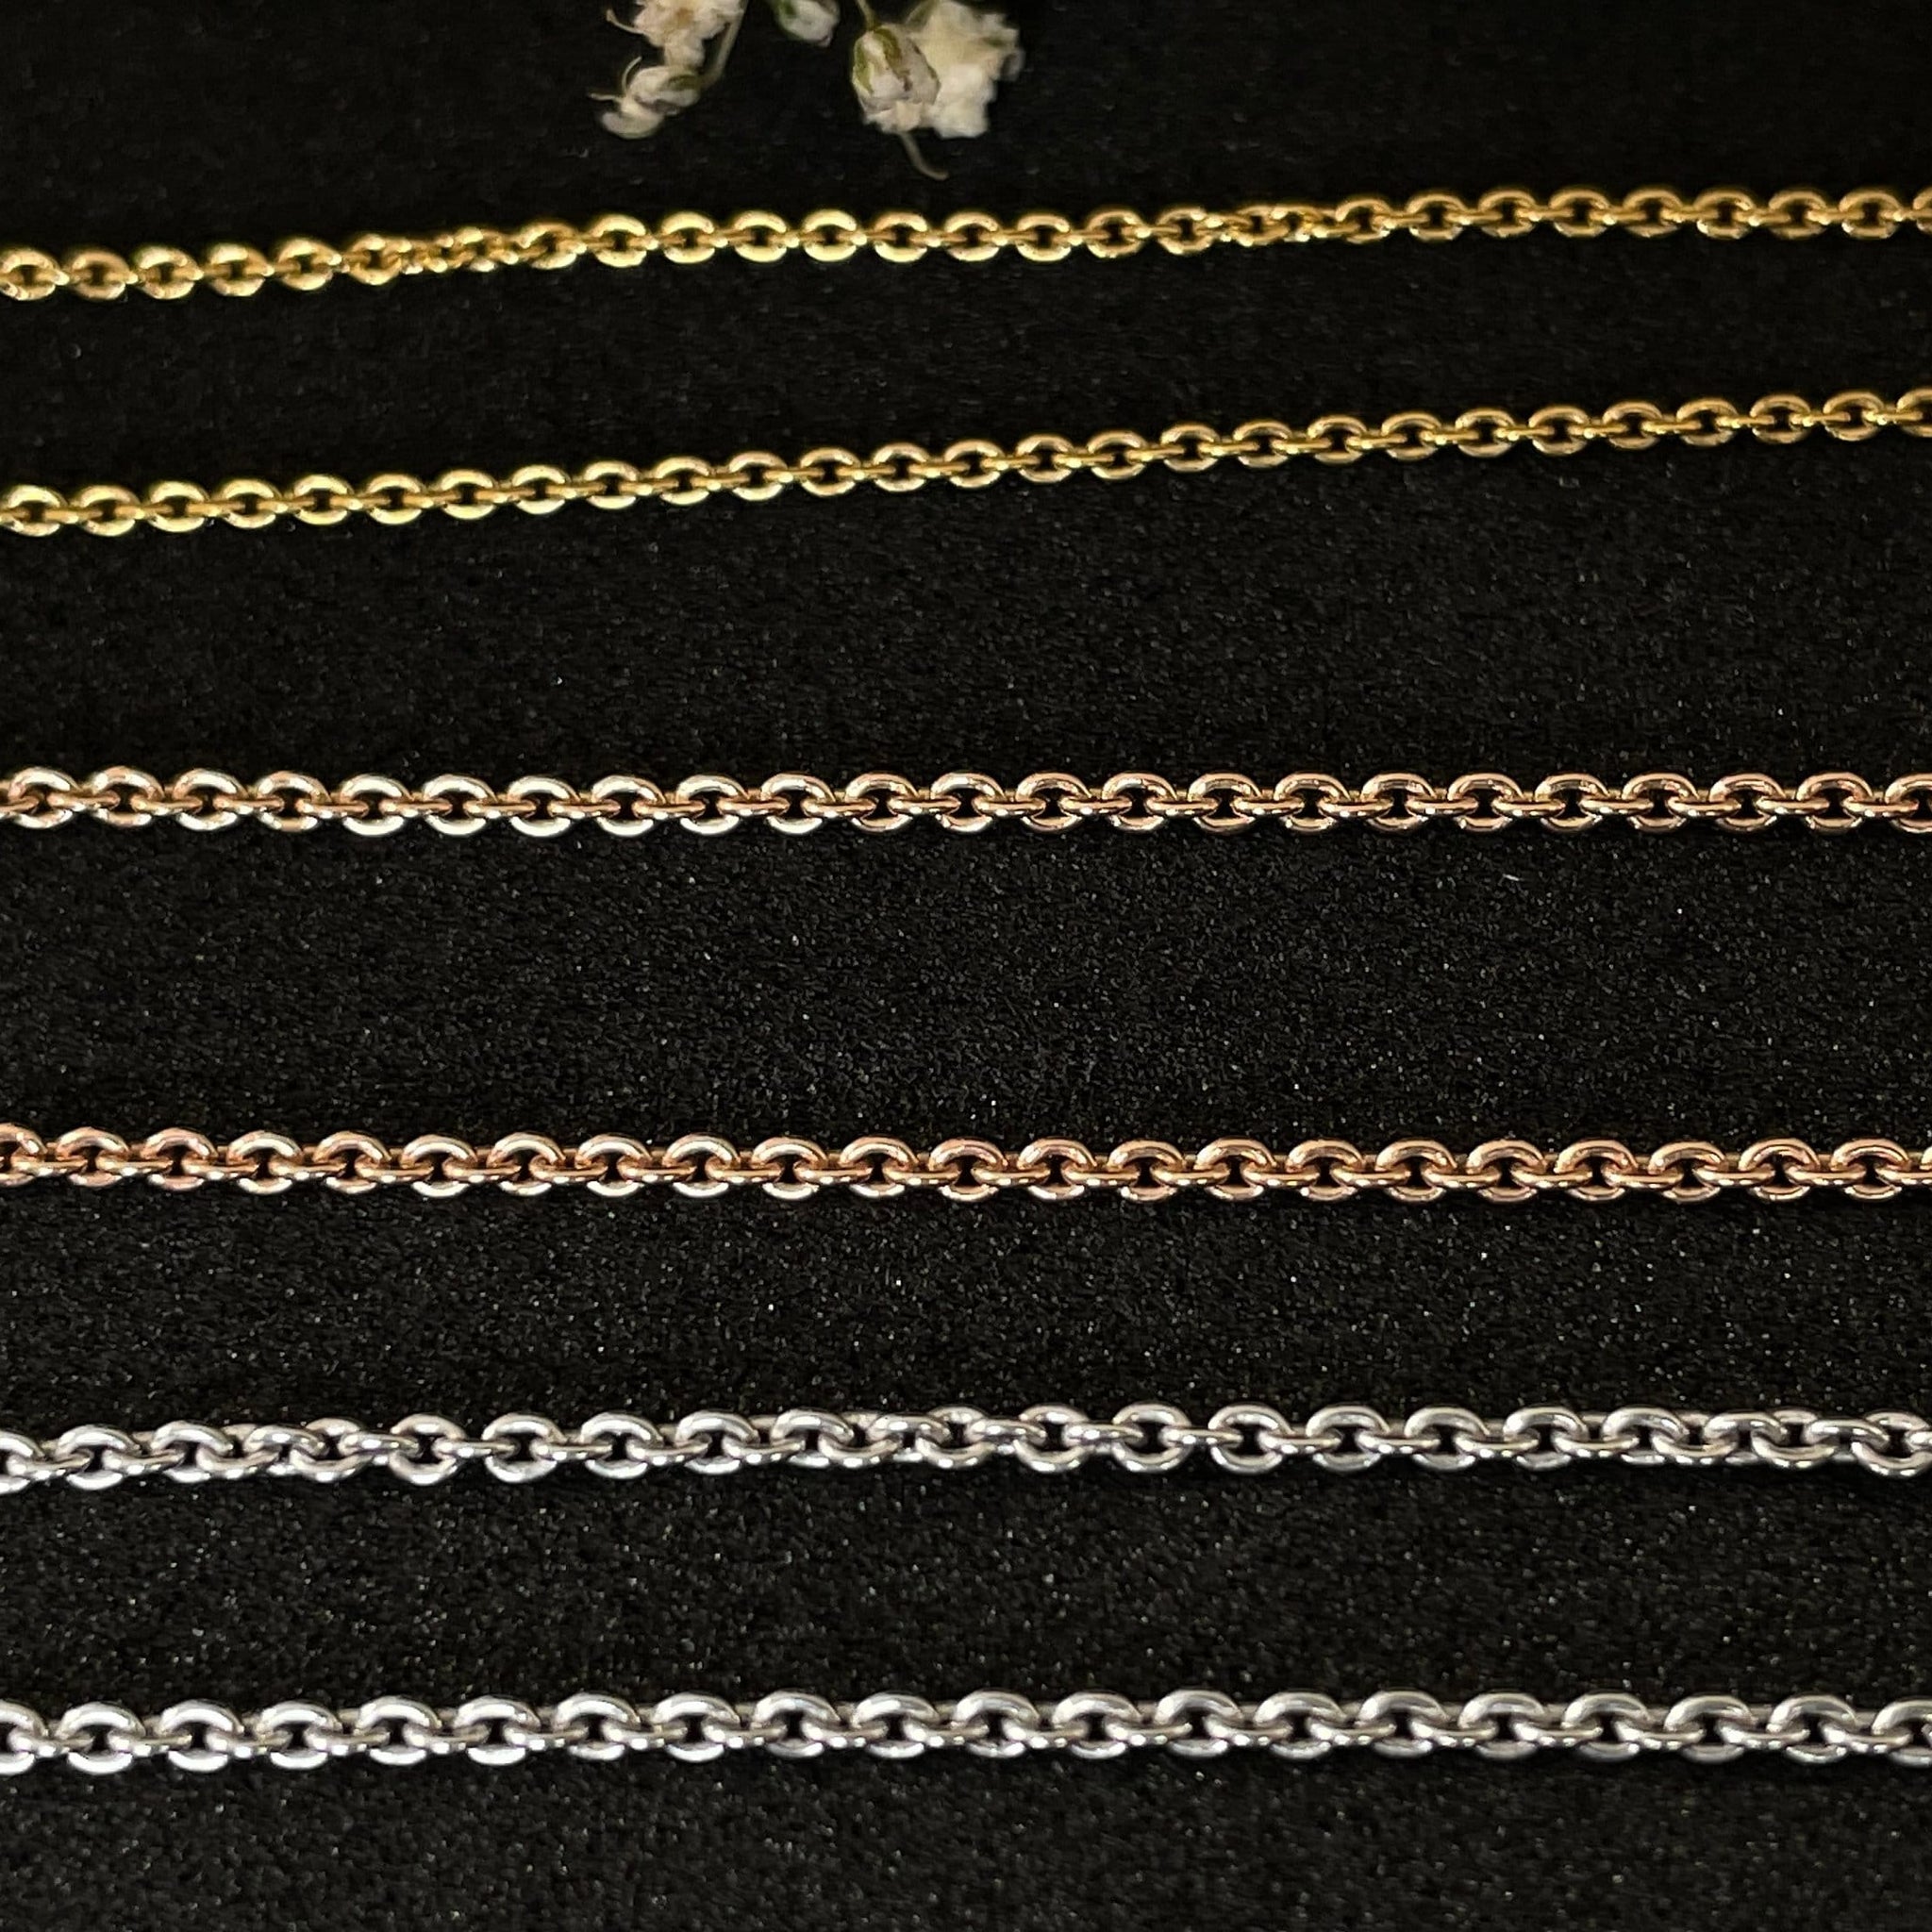 Chaîne d'ancre en or massif 14K, chaîne d'ancre en or massif de 1,60 mm, chaîne à maillons de câble en or massif, collier de chaîne d'ancre pour homme